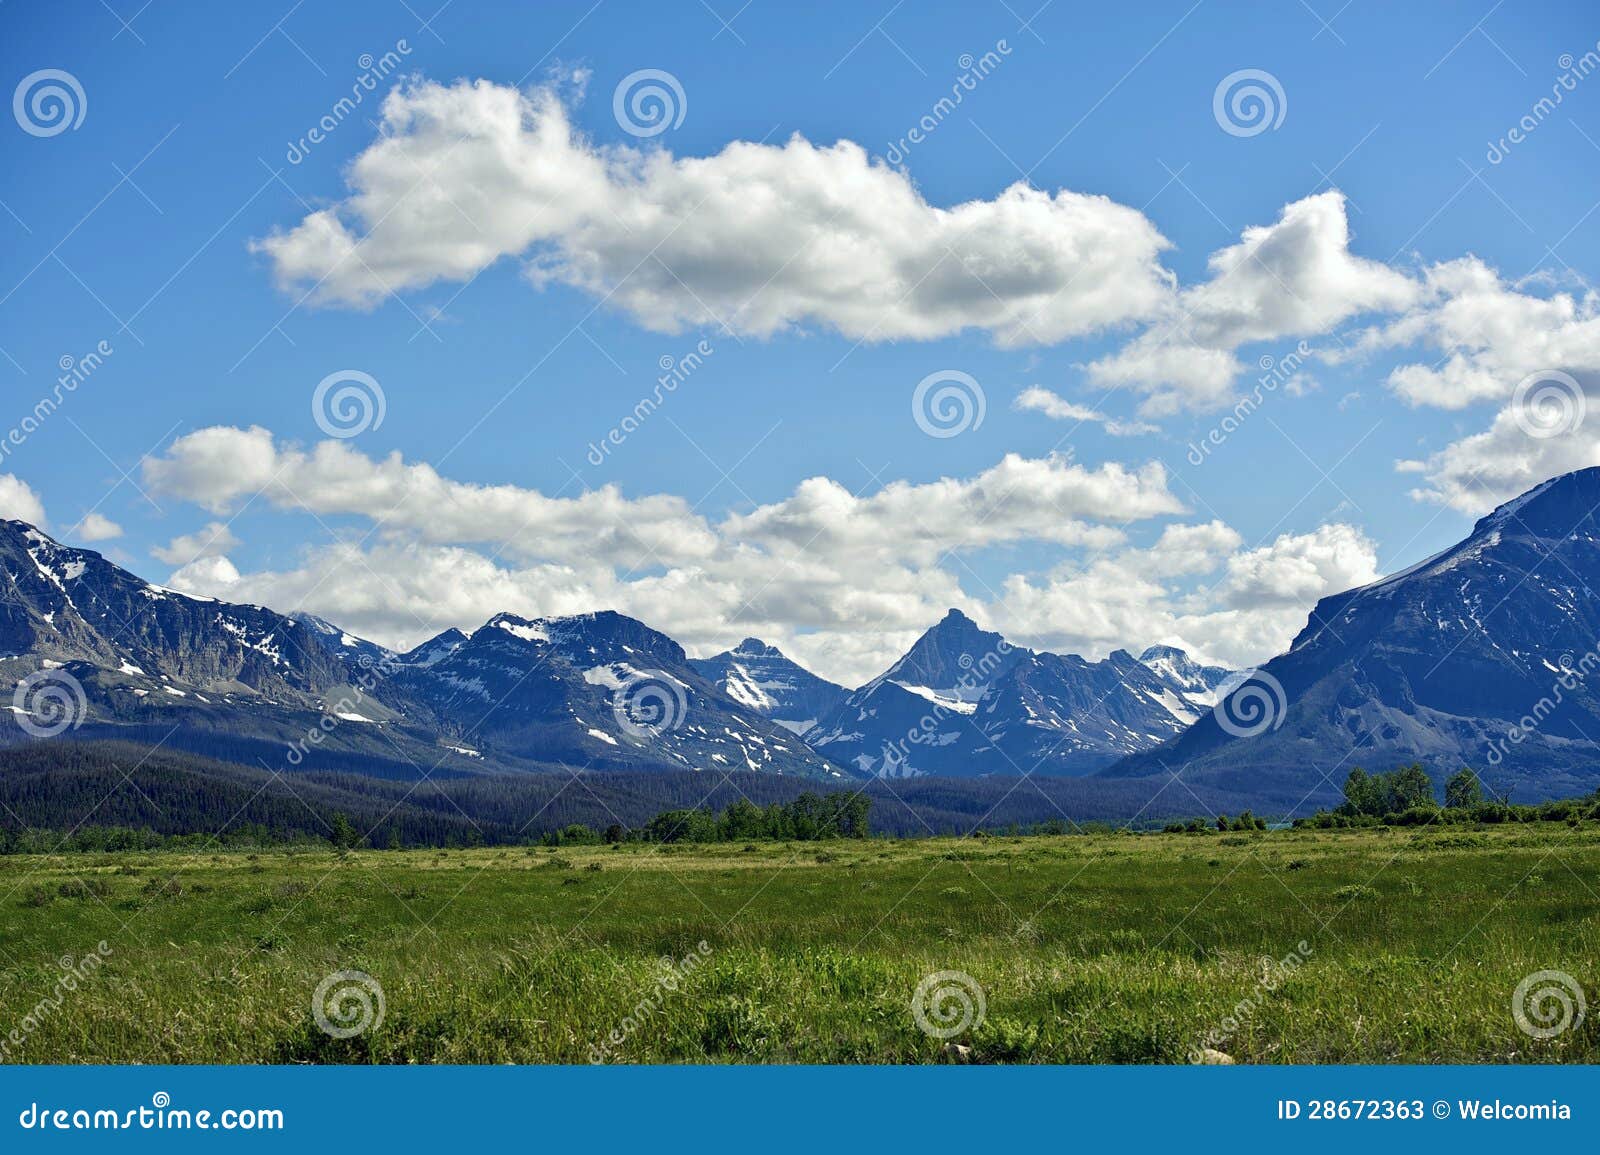 montana rocky mountains